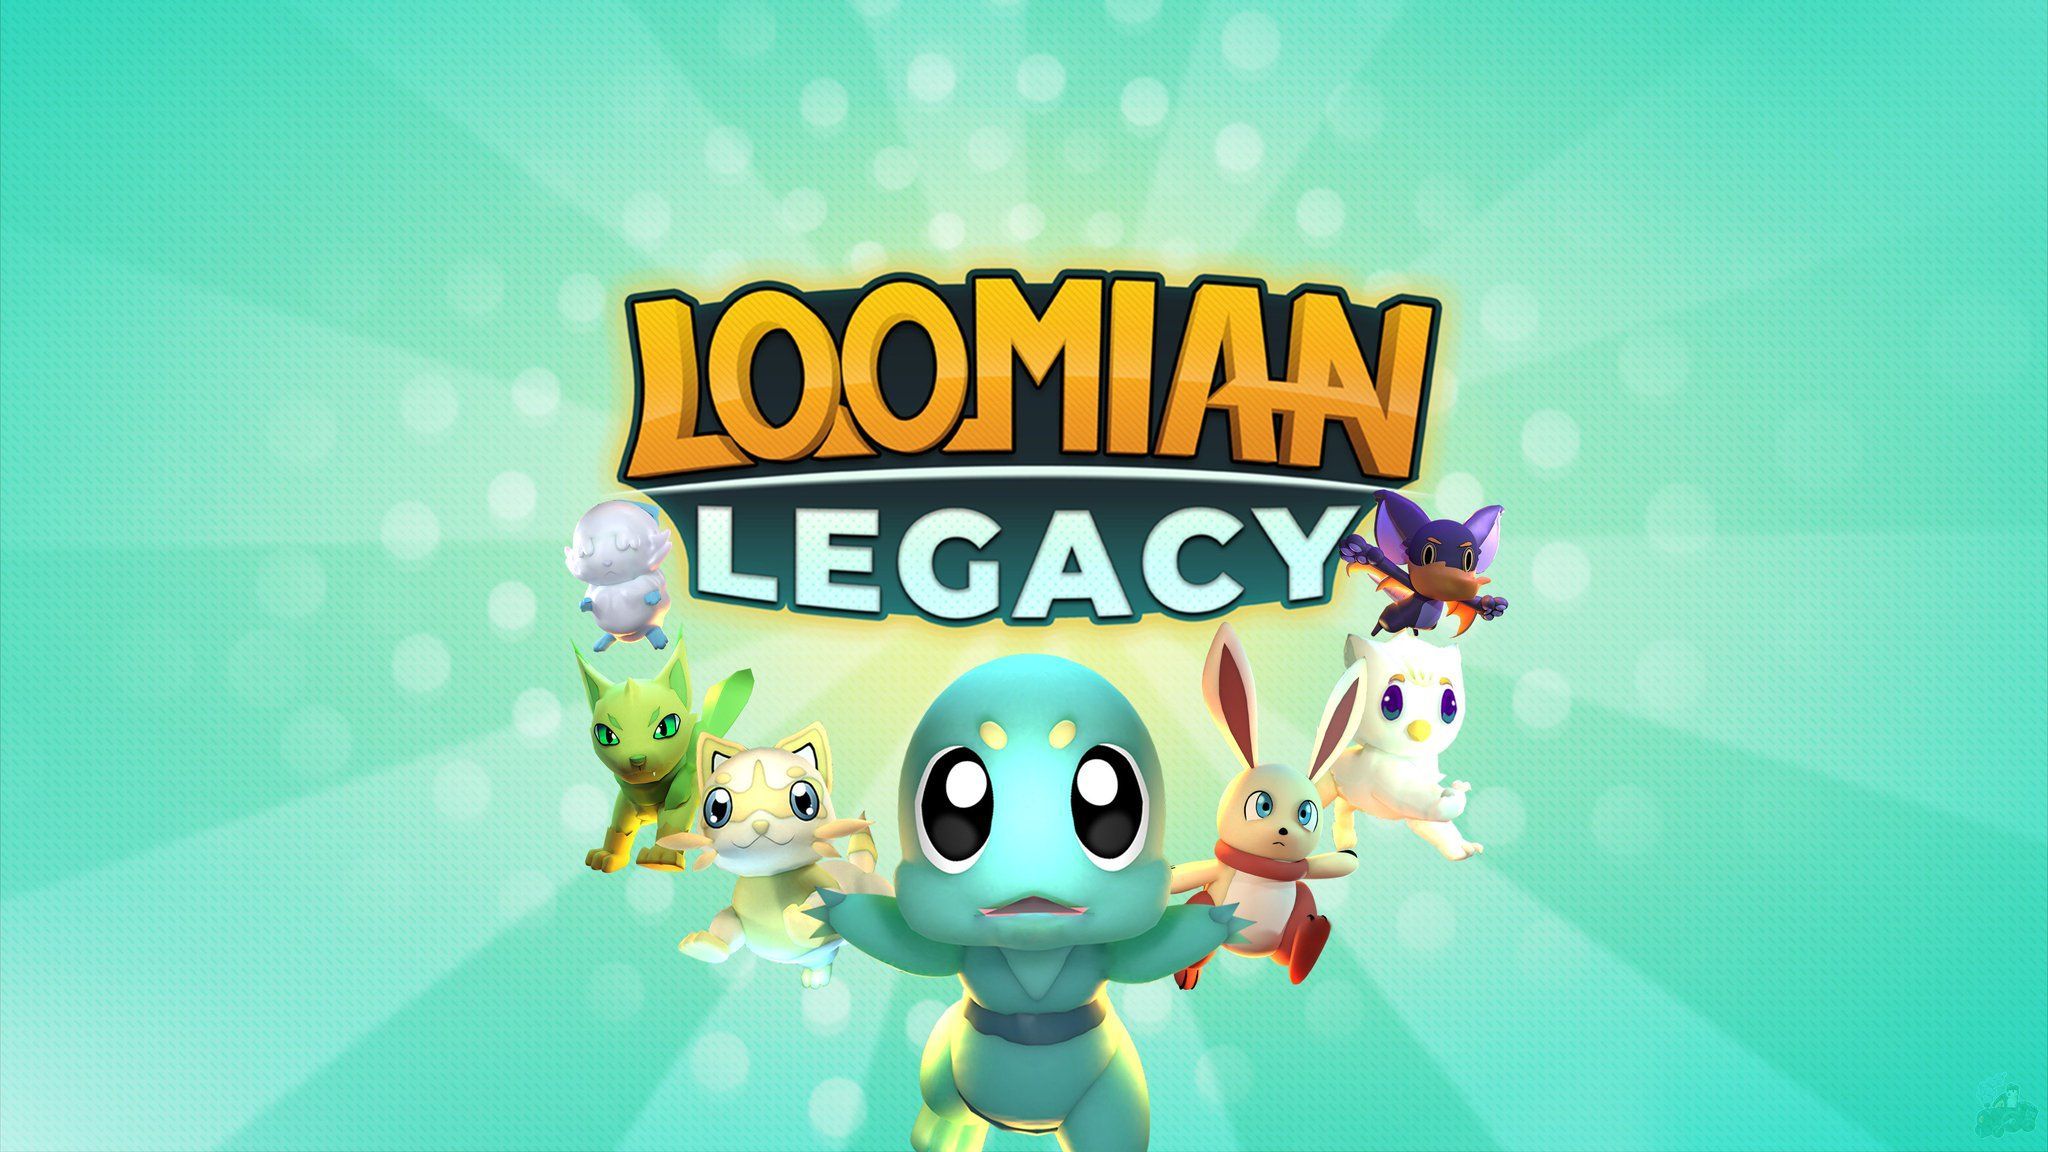 Loomian Legacy Wallpaper Free Loomian Legacy Background